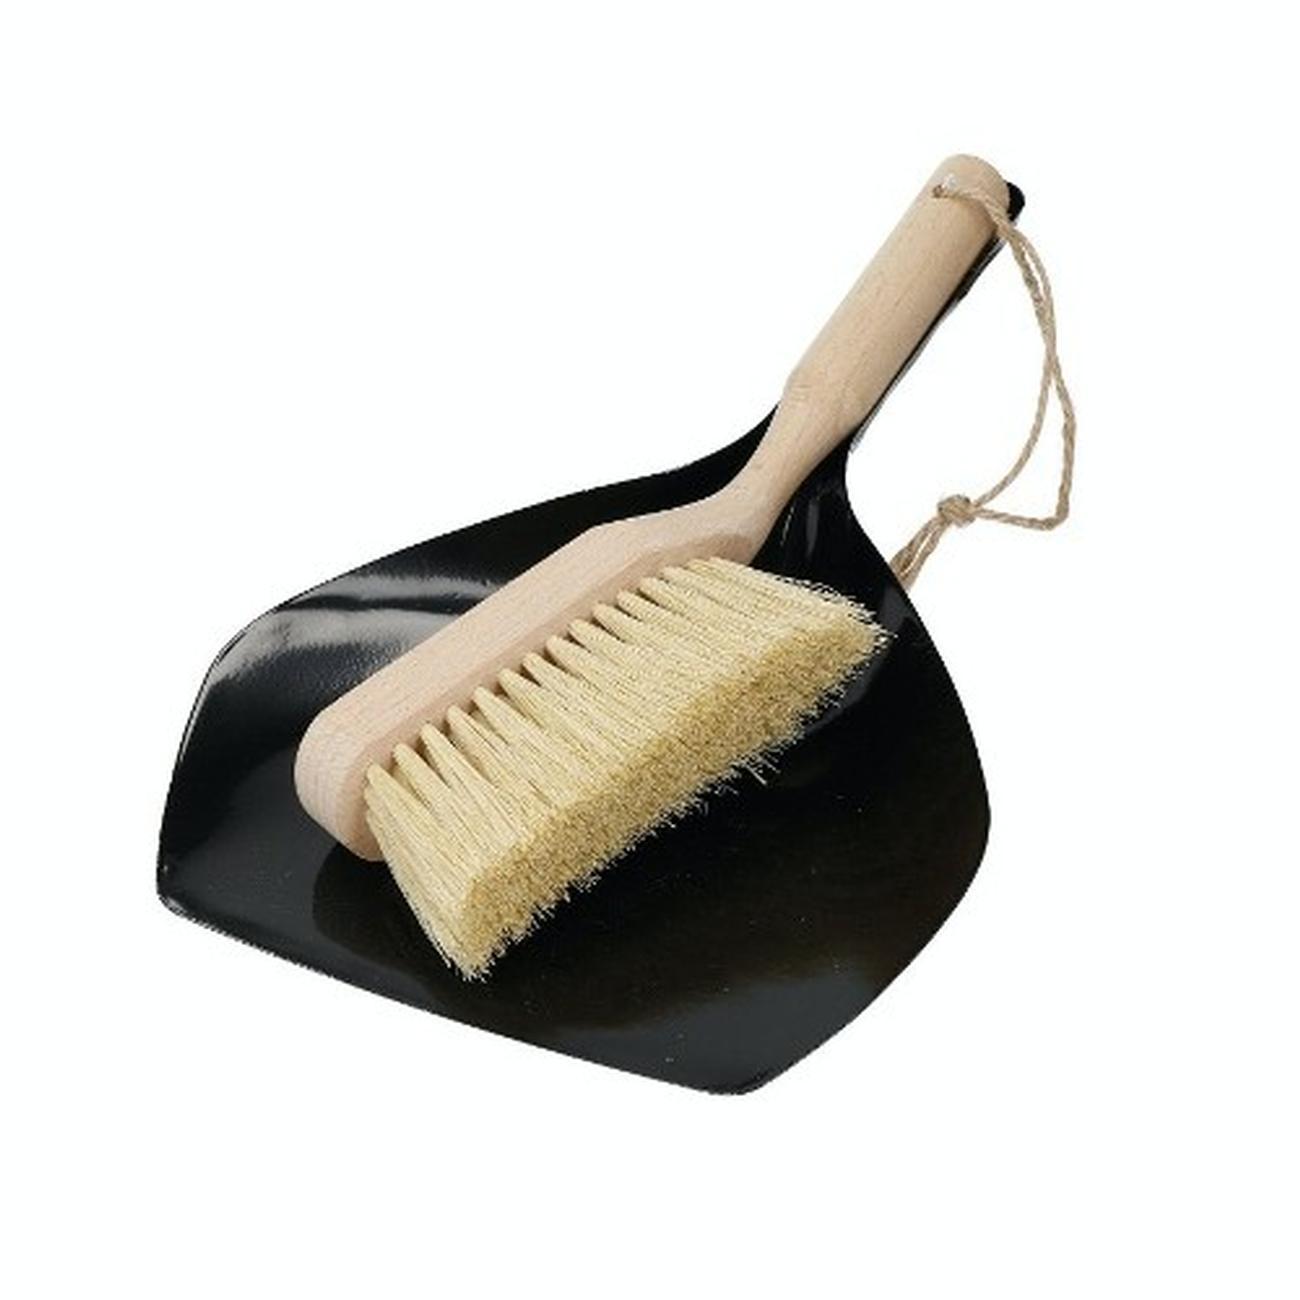 kitchencraft-dustpan-and-brush-set-natural-elements - Natural Elements Dustpan & Brush Set